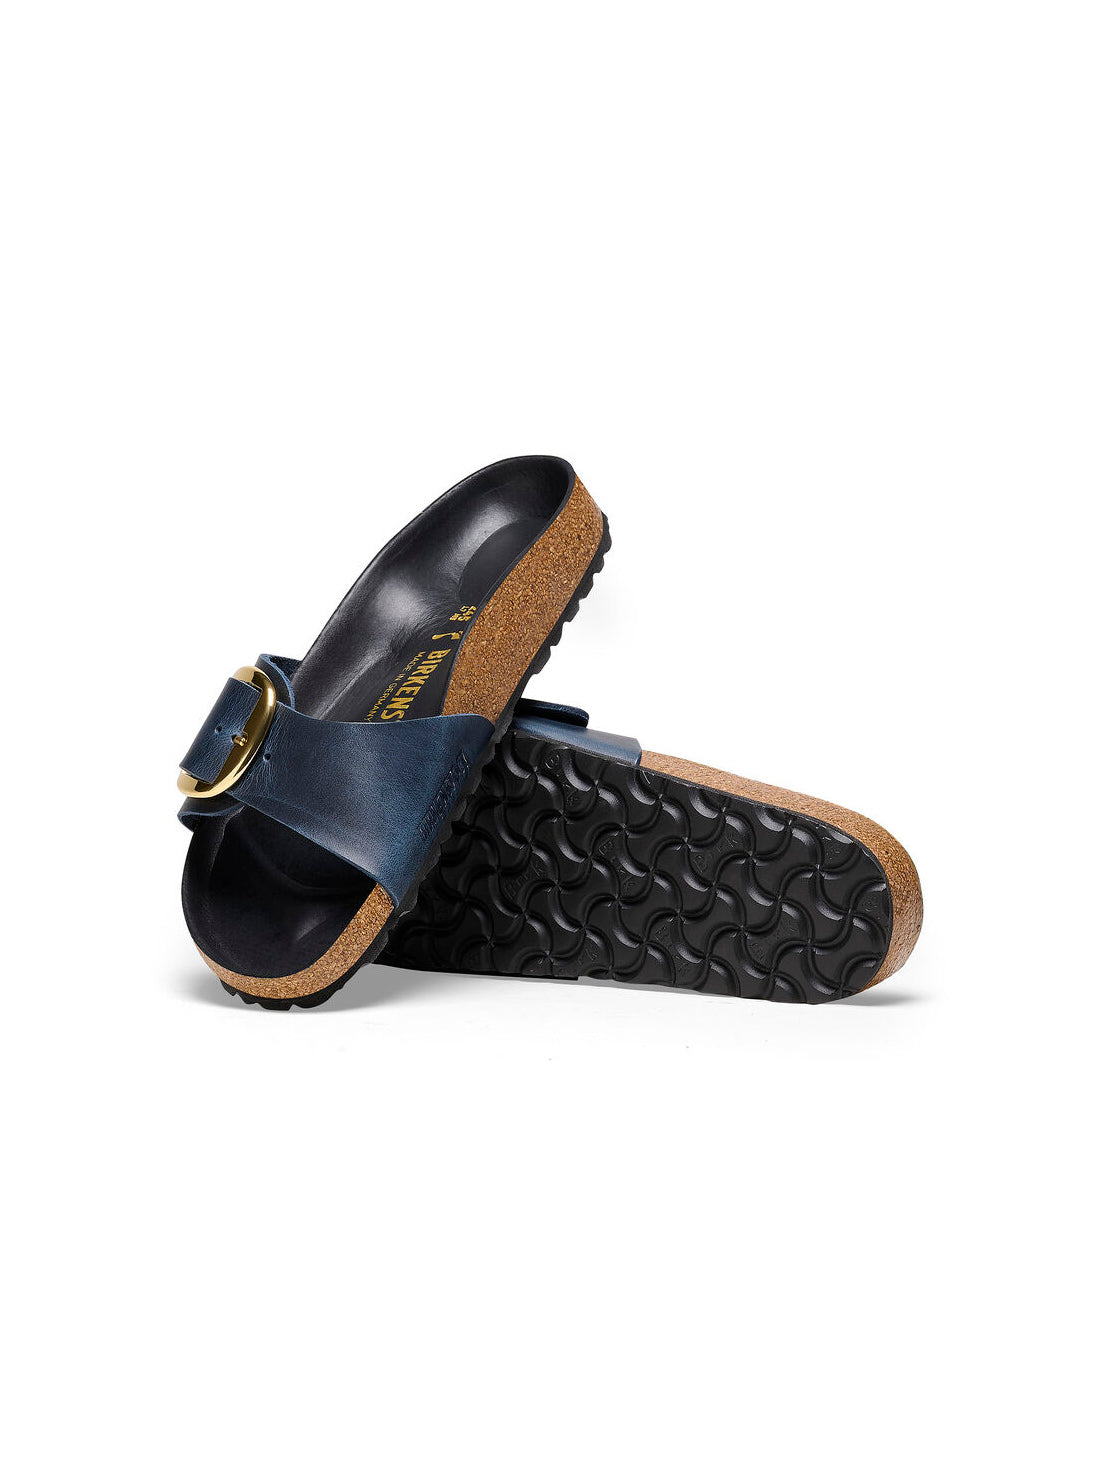 birkenstock madrid big buckle sandal in blue oiled leather narrow